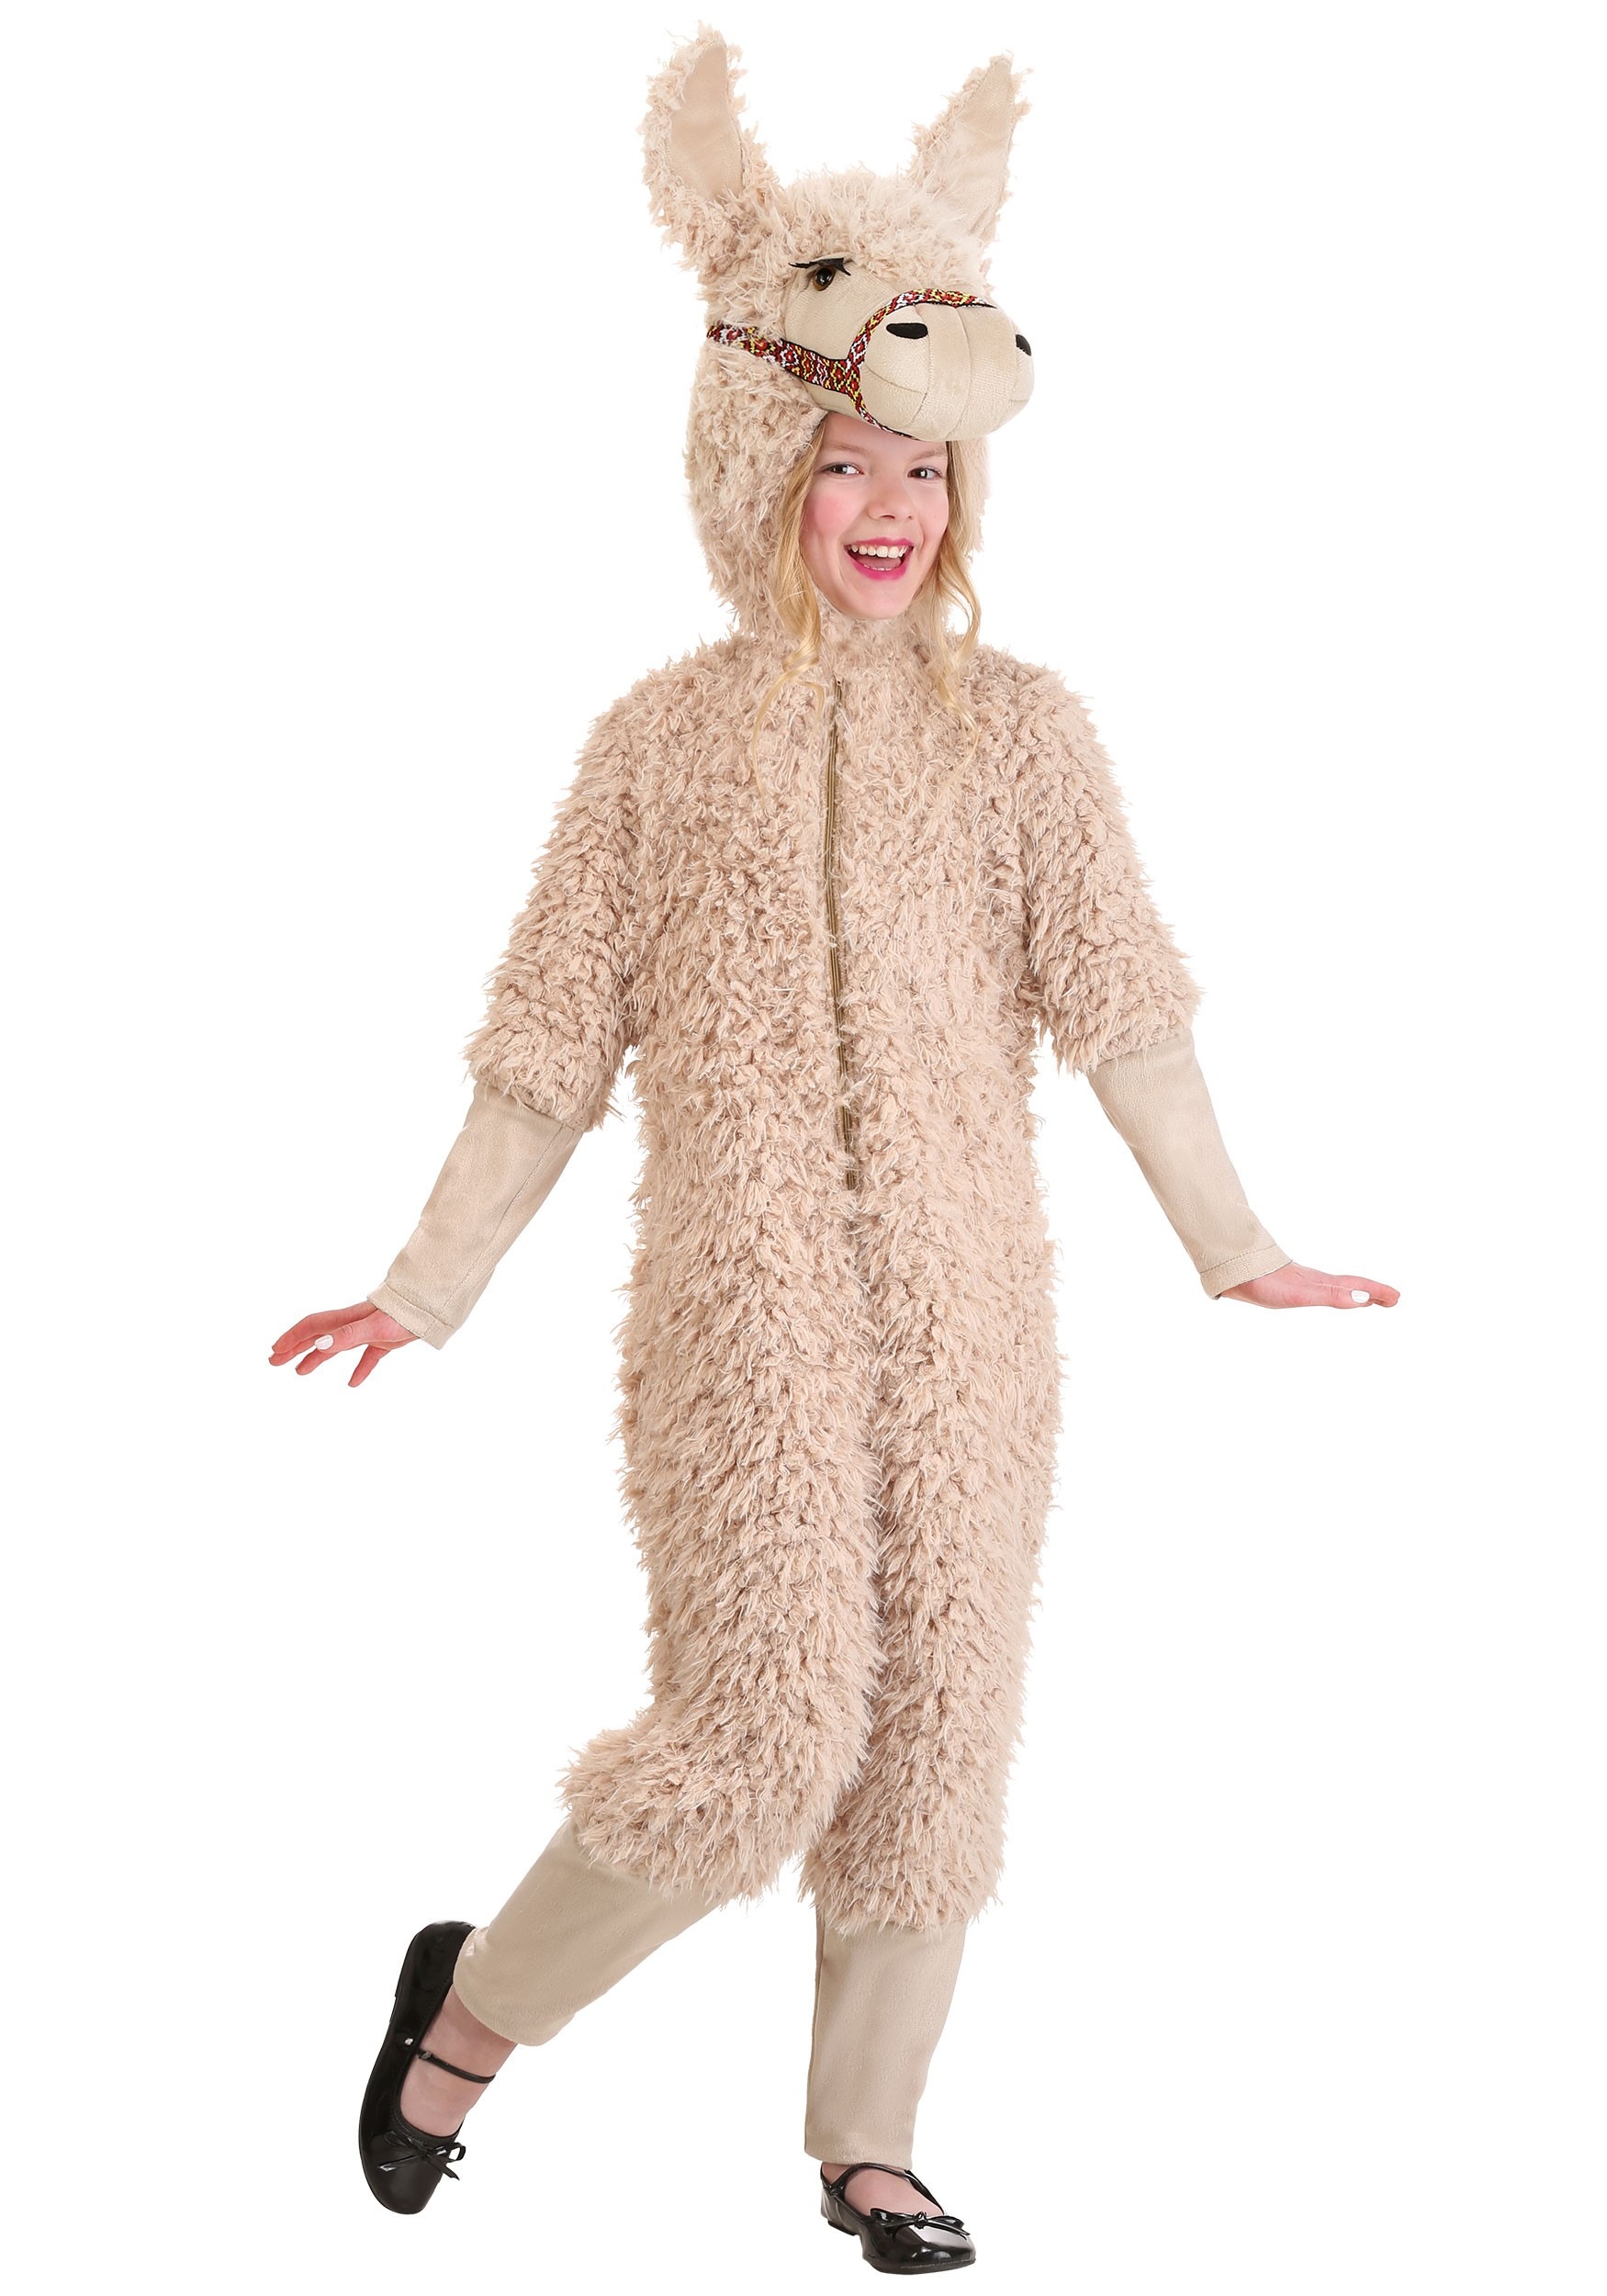 Photos - Fancy Dress FUN Costumes Llama Costume for Kids Black/Beige